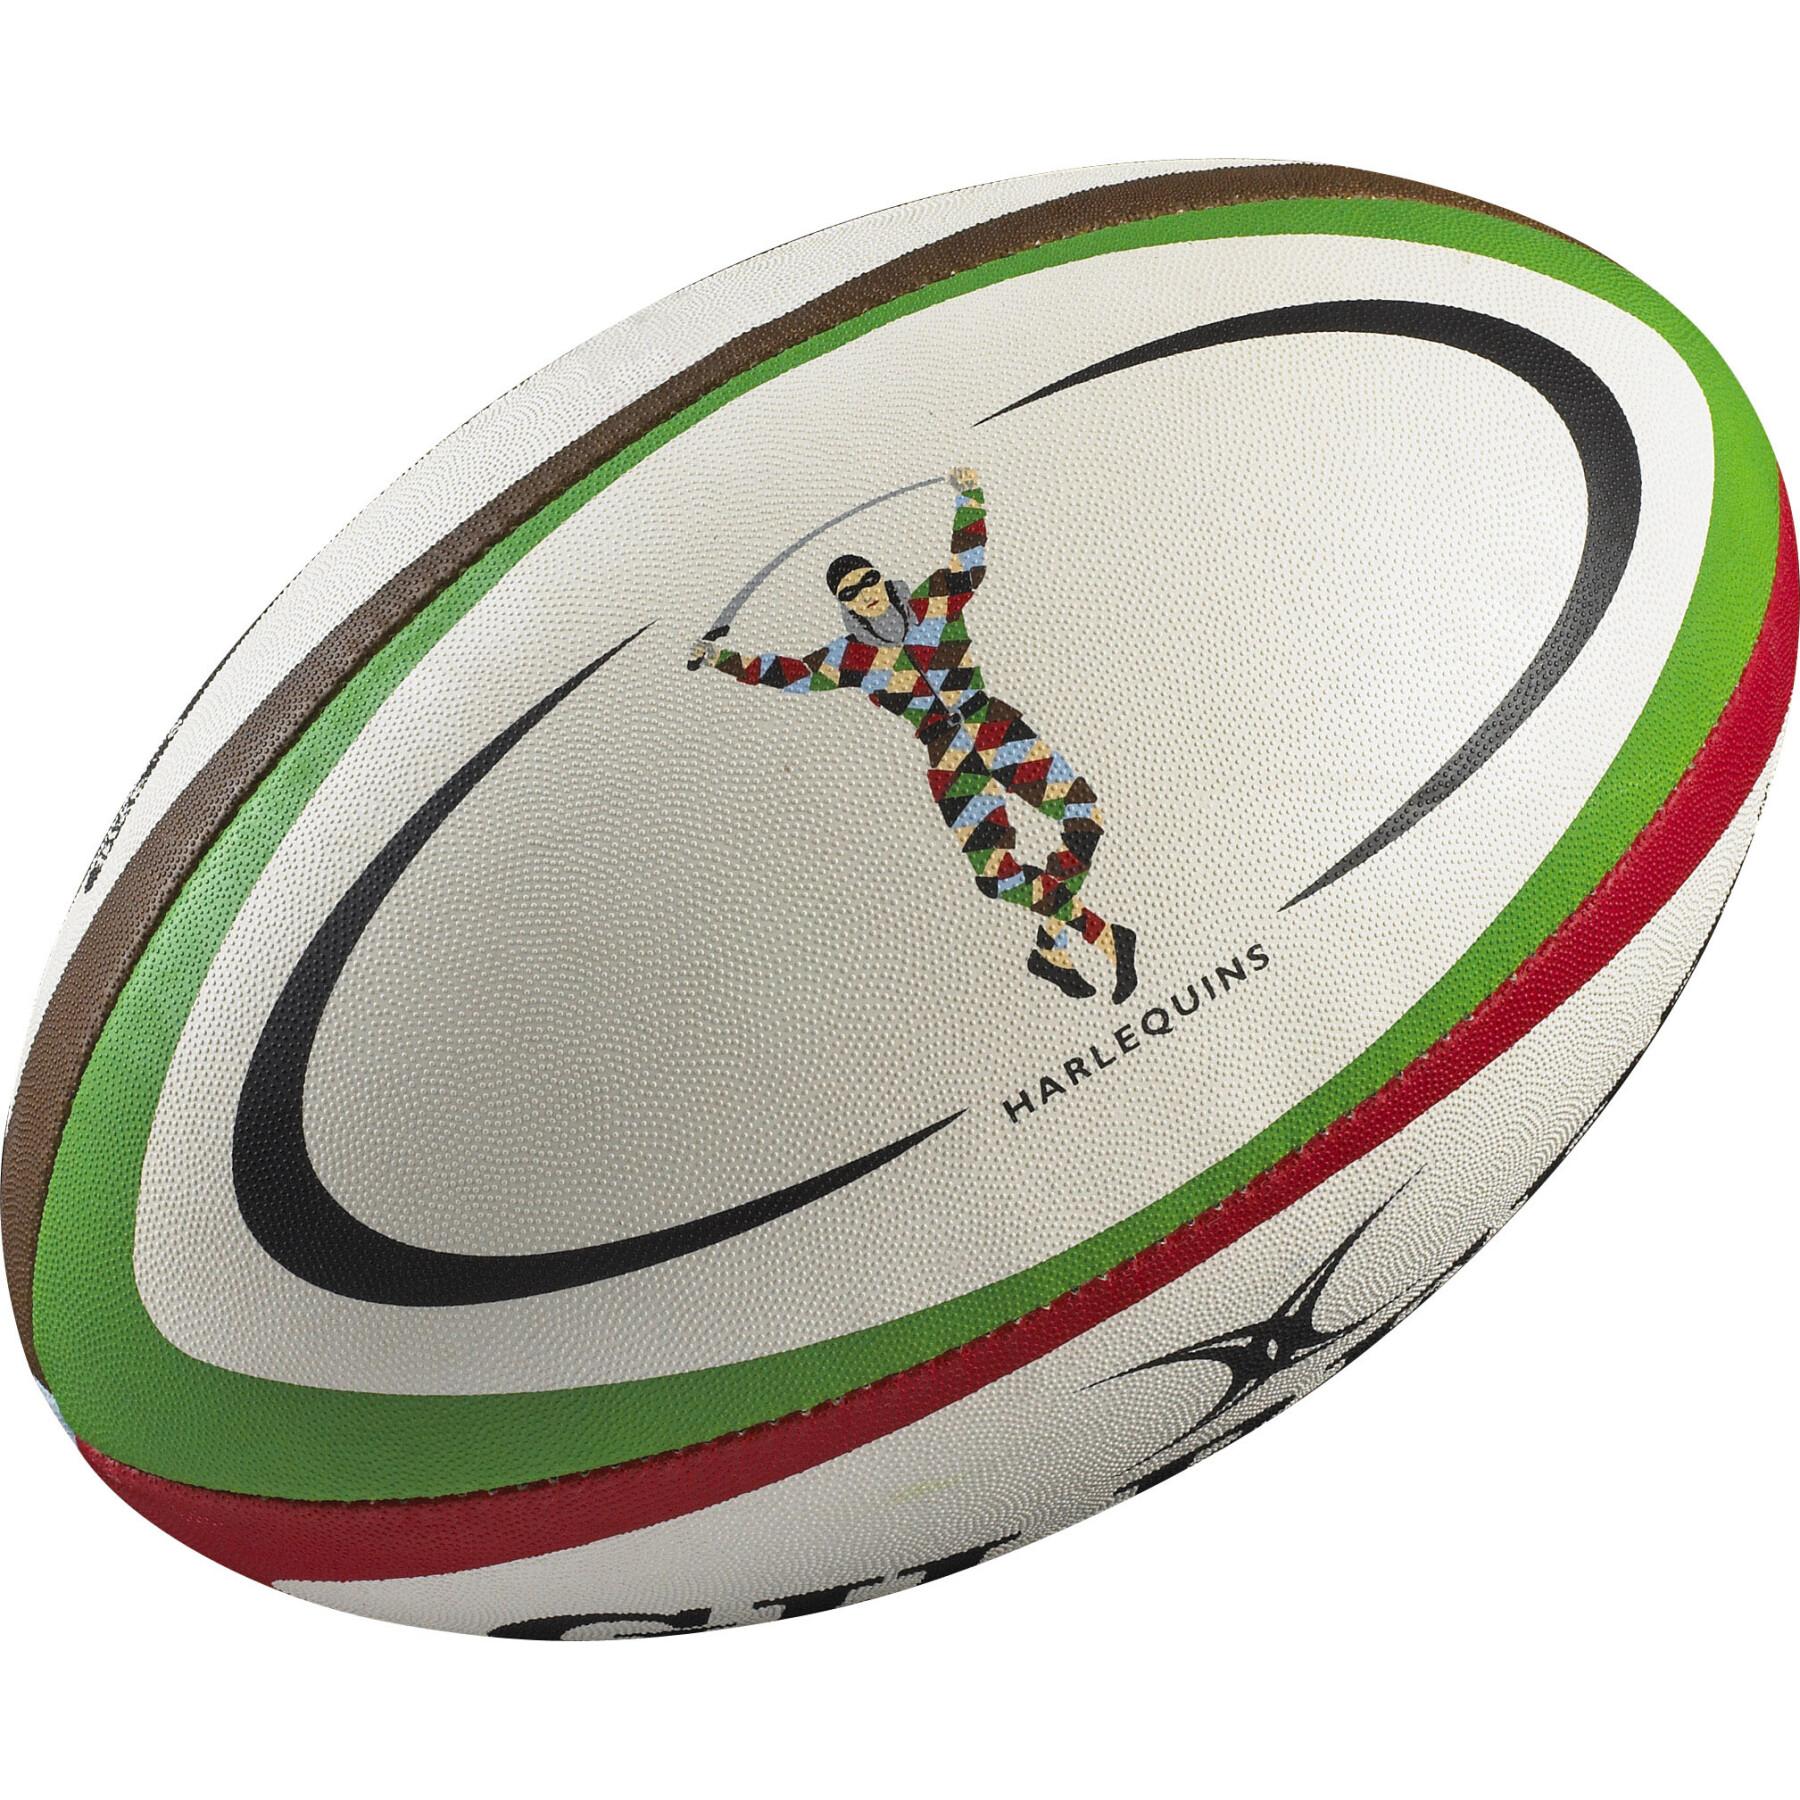 Mini ballon de rugby Gilbert Harlequins (taille 1)